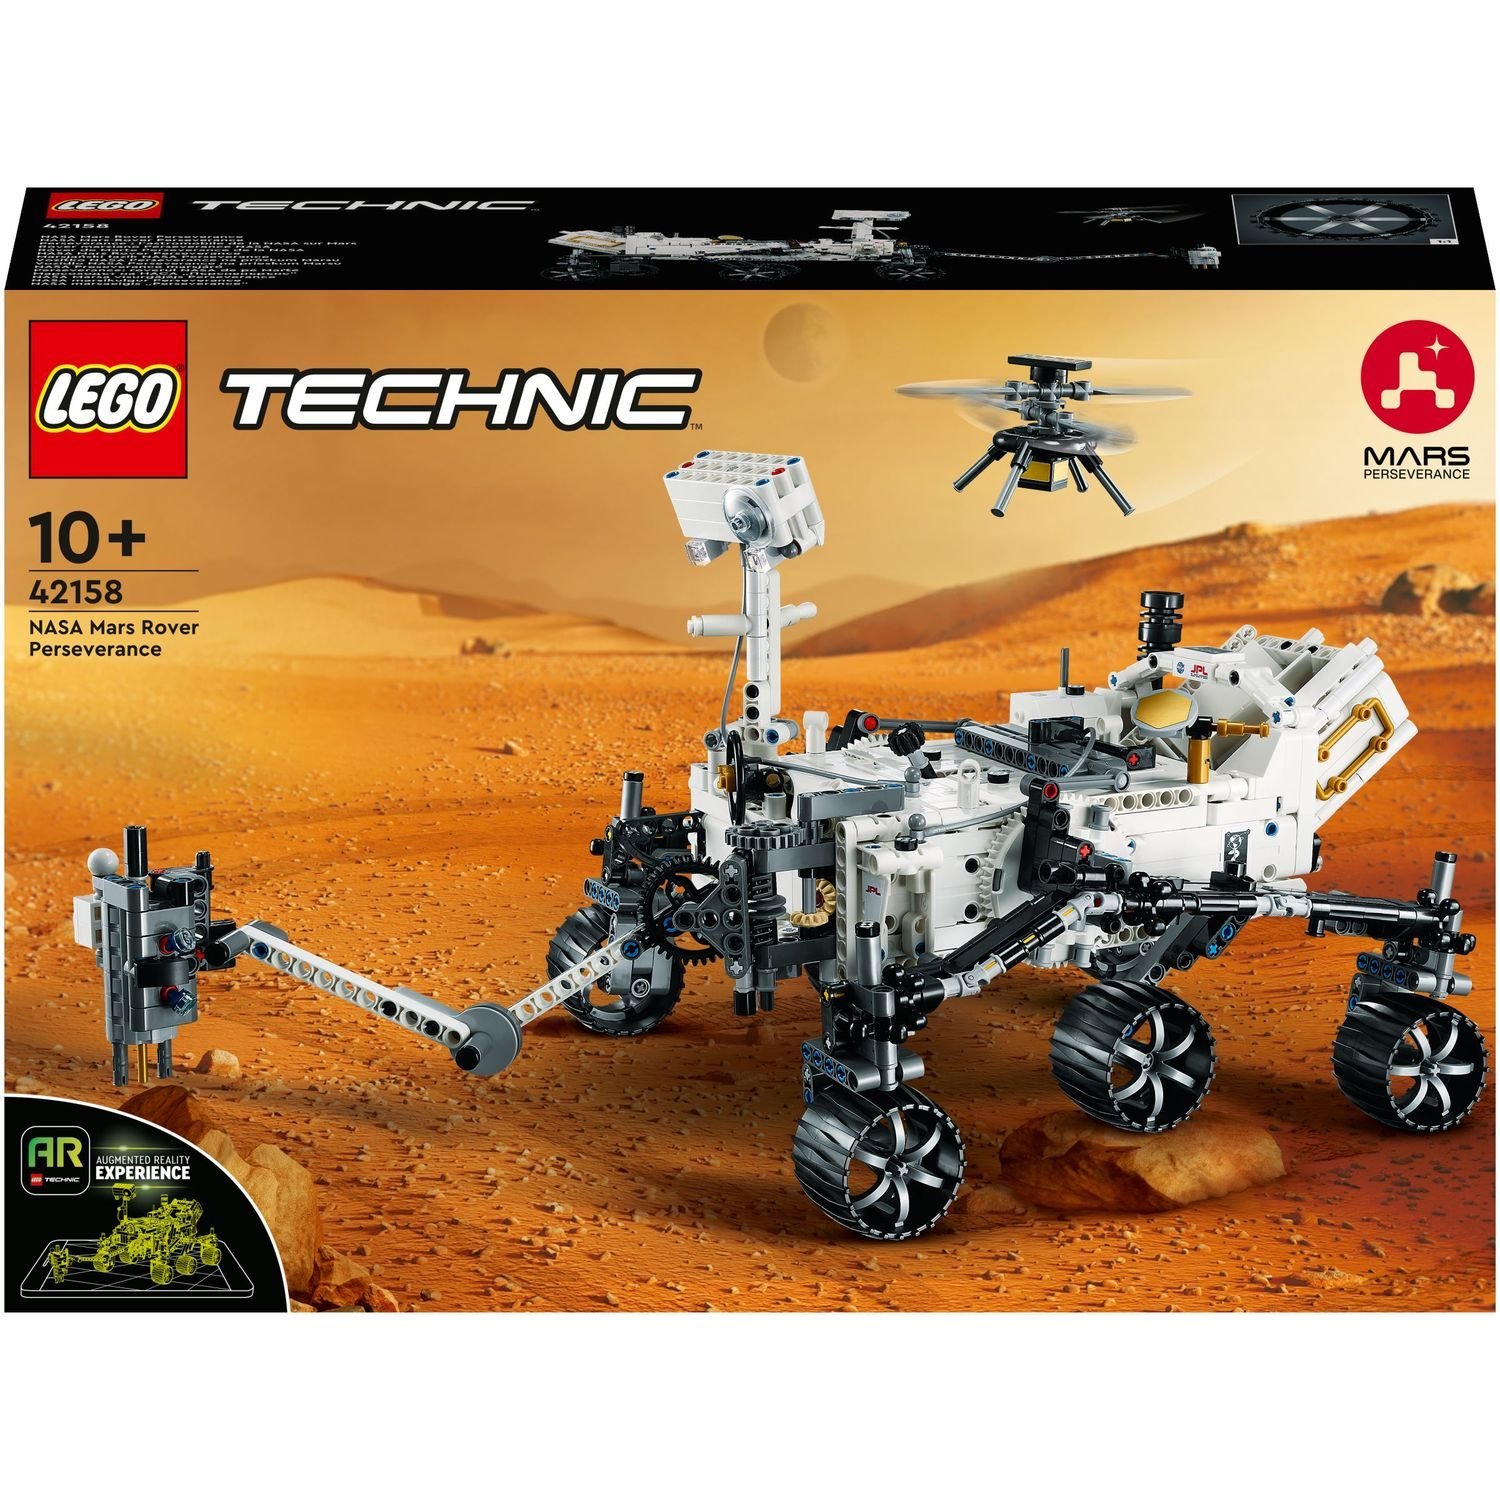 Конструктор LEGO Technic Миссия NASA Марсоход "Персеверанс", 1132 детали (42158) - фото 1